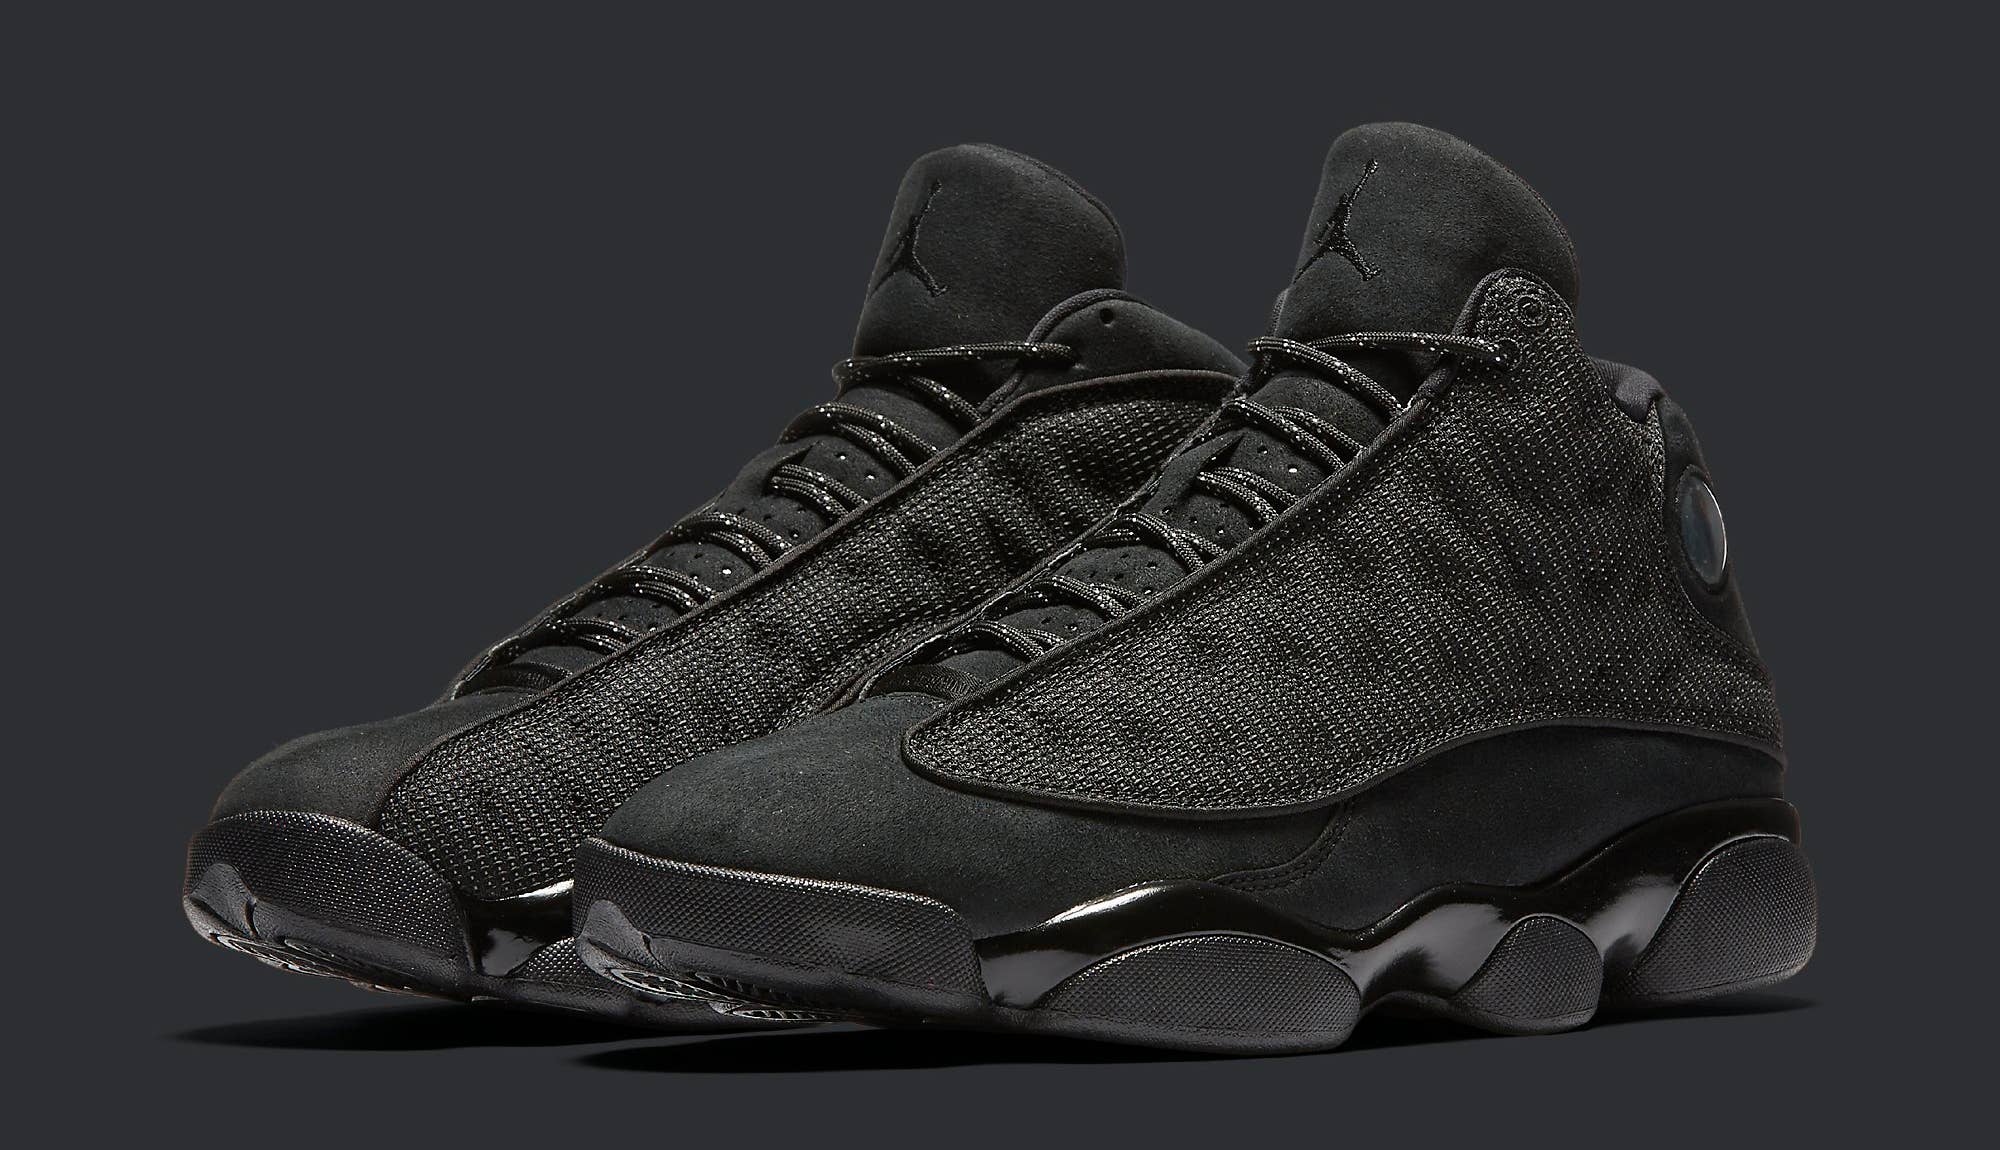 Buy 'Black Cat' Air Jordan 13s Early Here